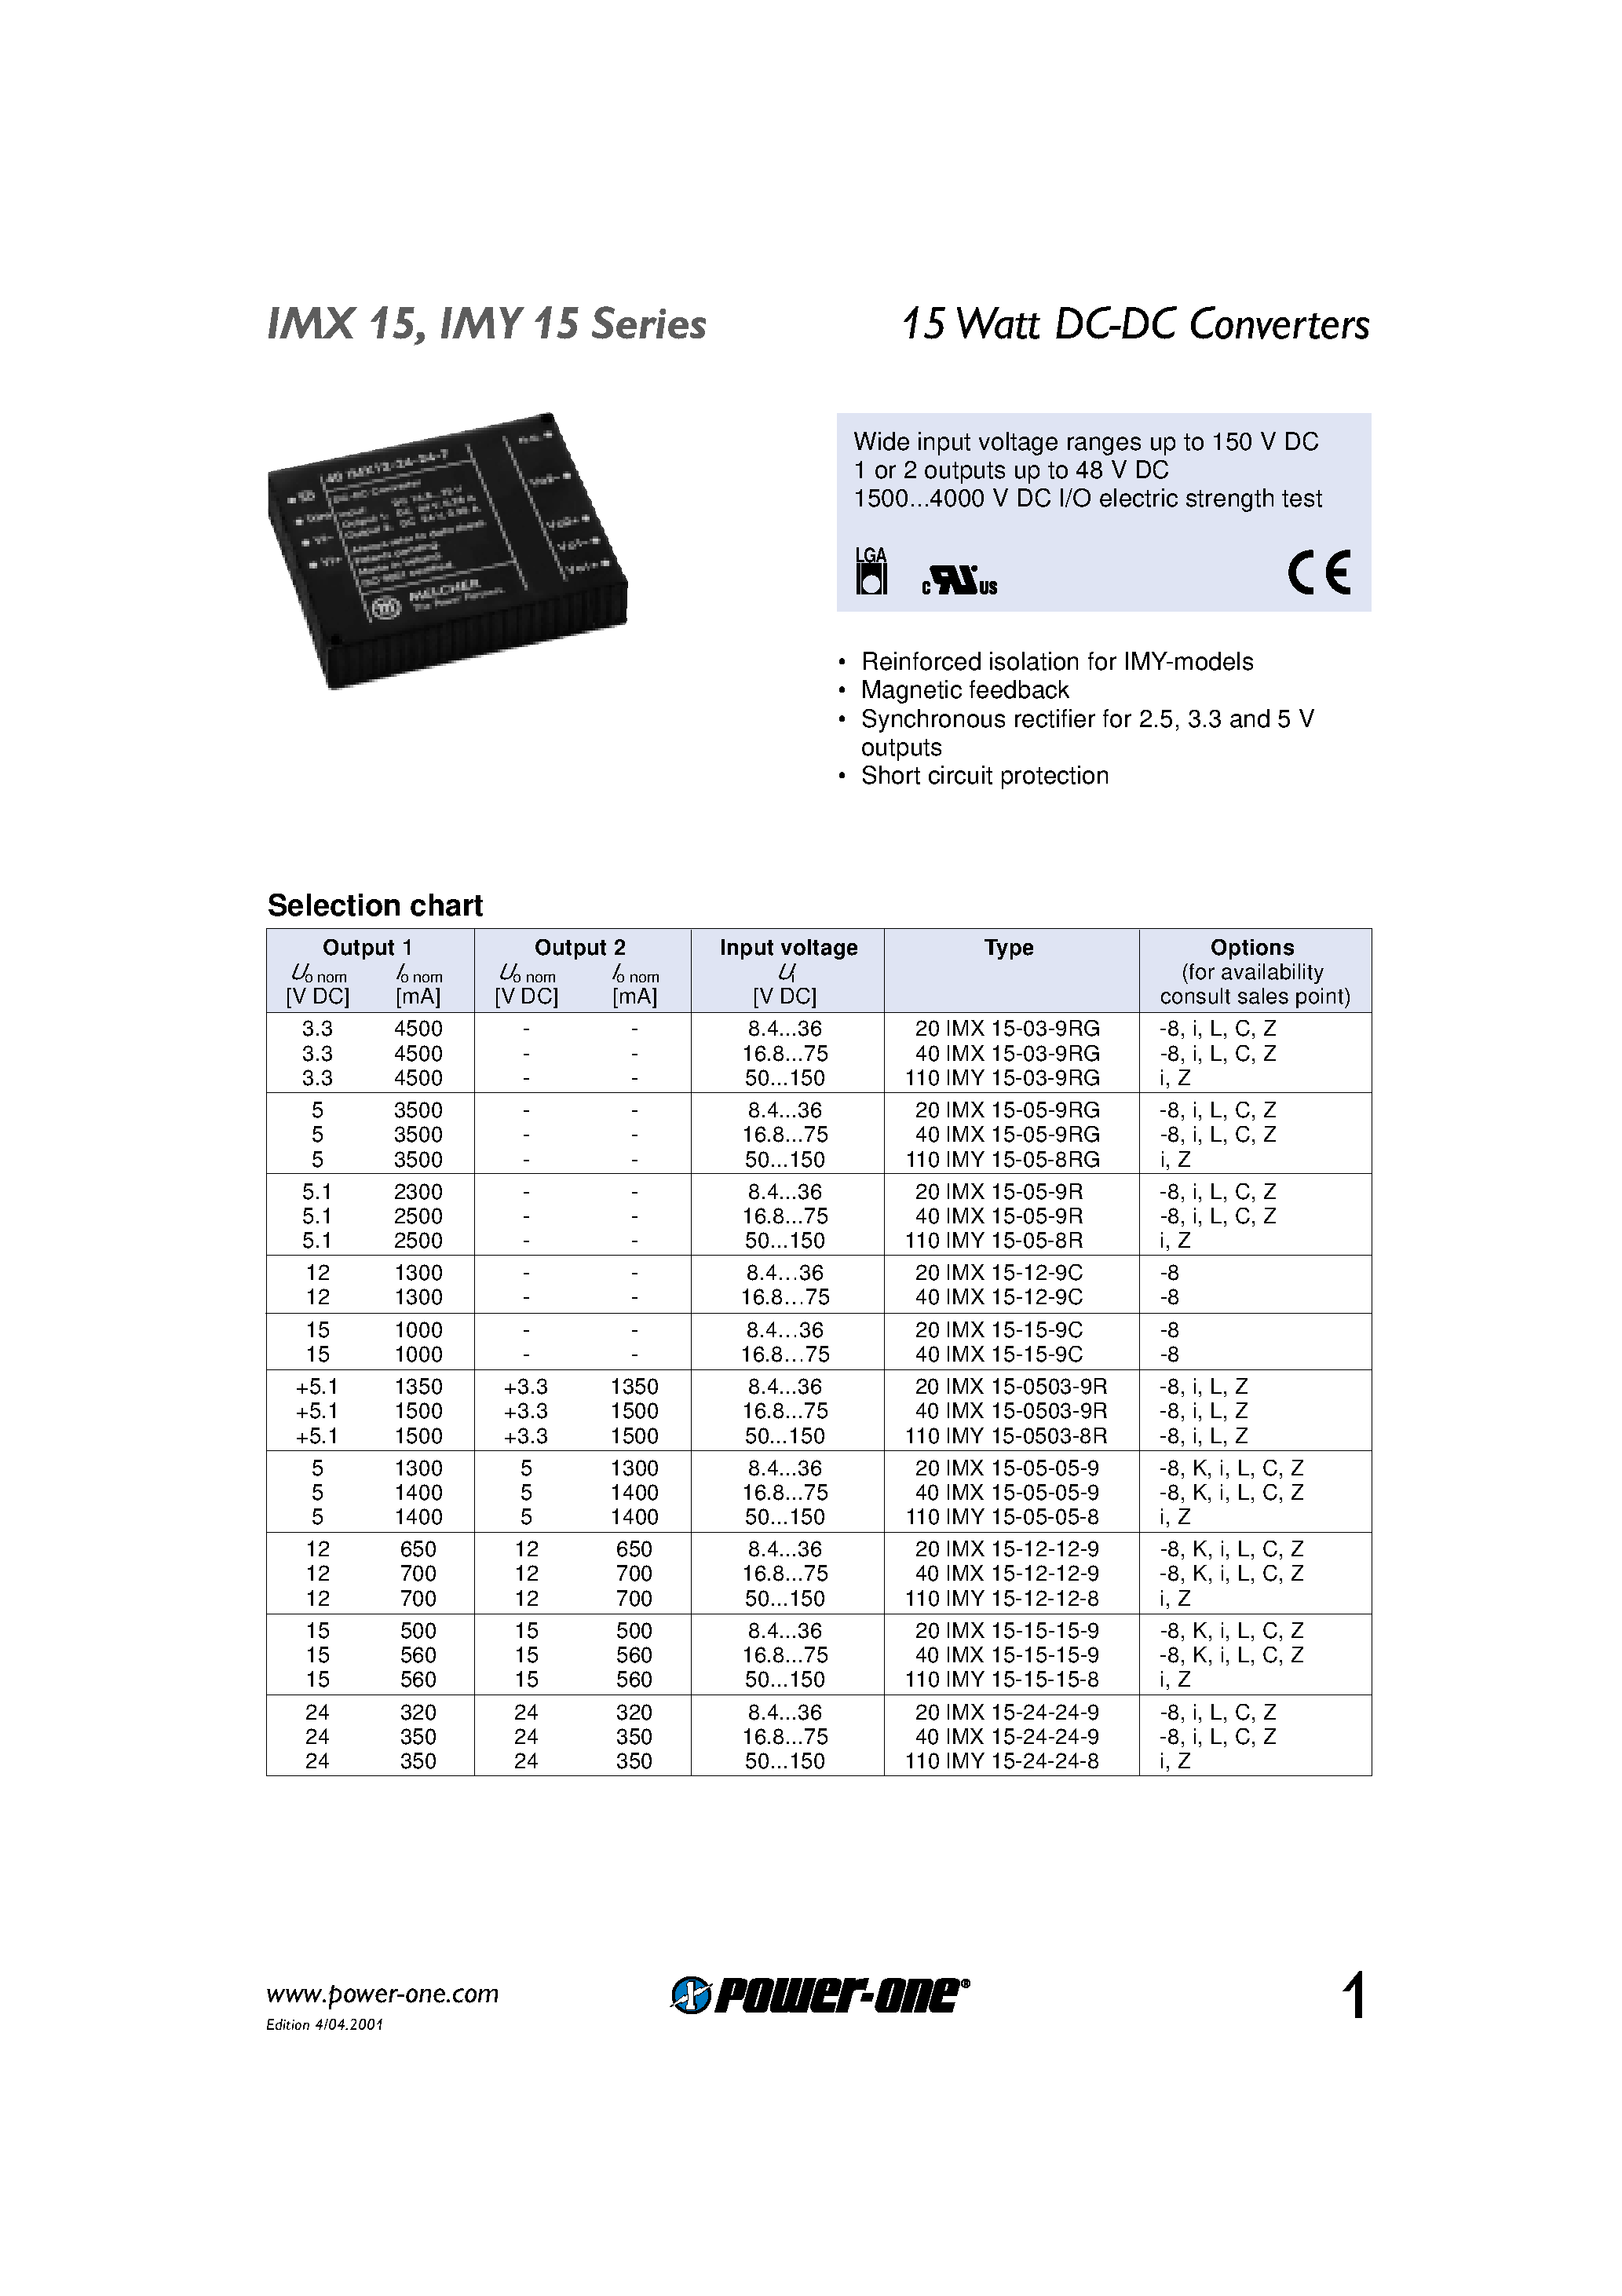 Datasheet 40IMX15-24-24-9 - 15 Watt DC-DC Converters page 1